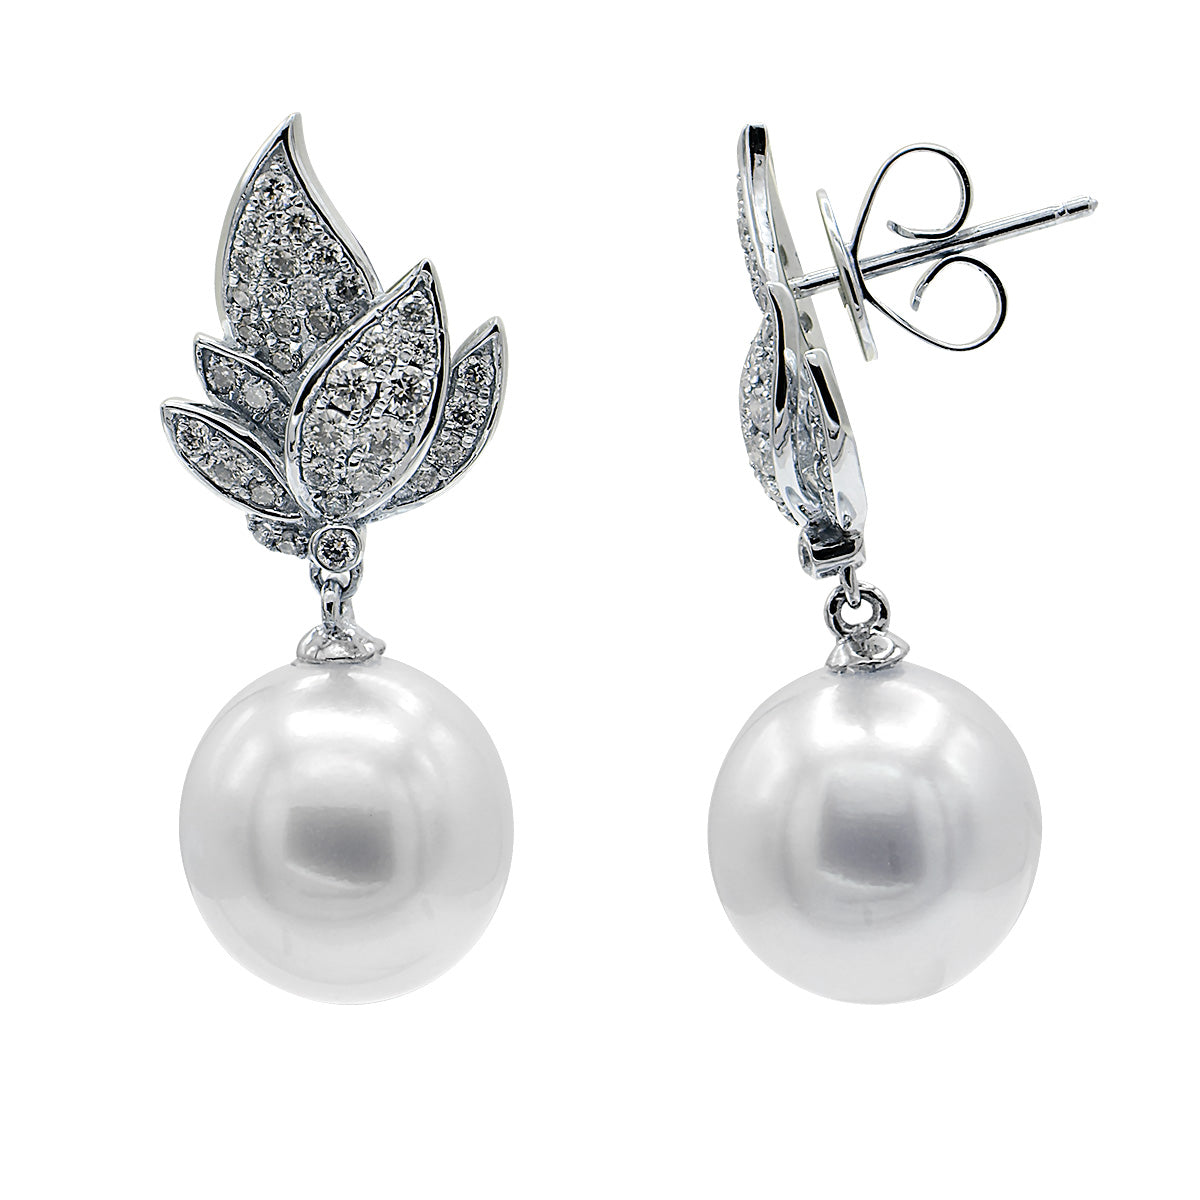 18KW White South Sea Pearl Earrings, 11-12mm